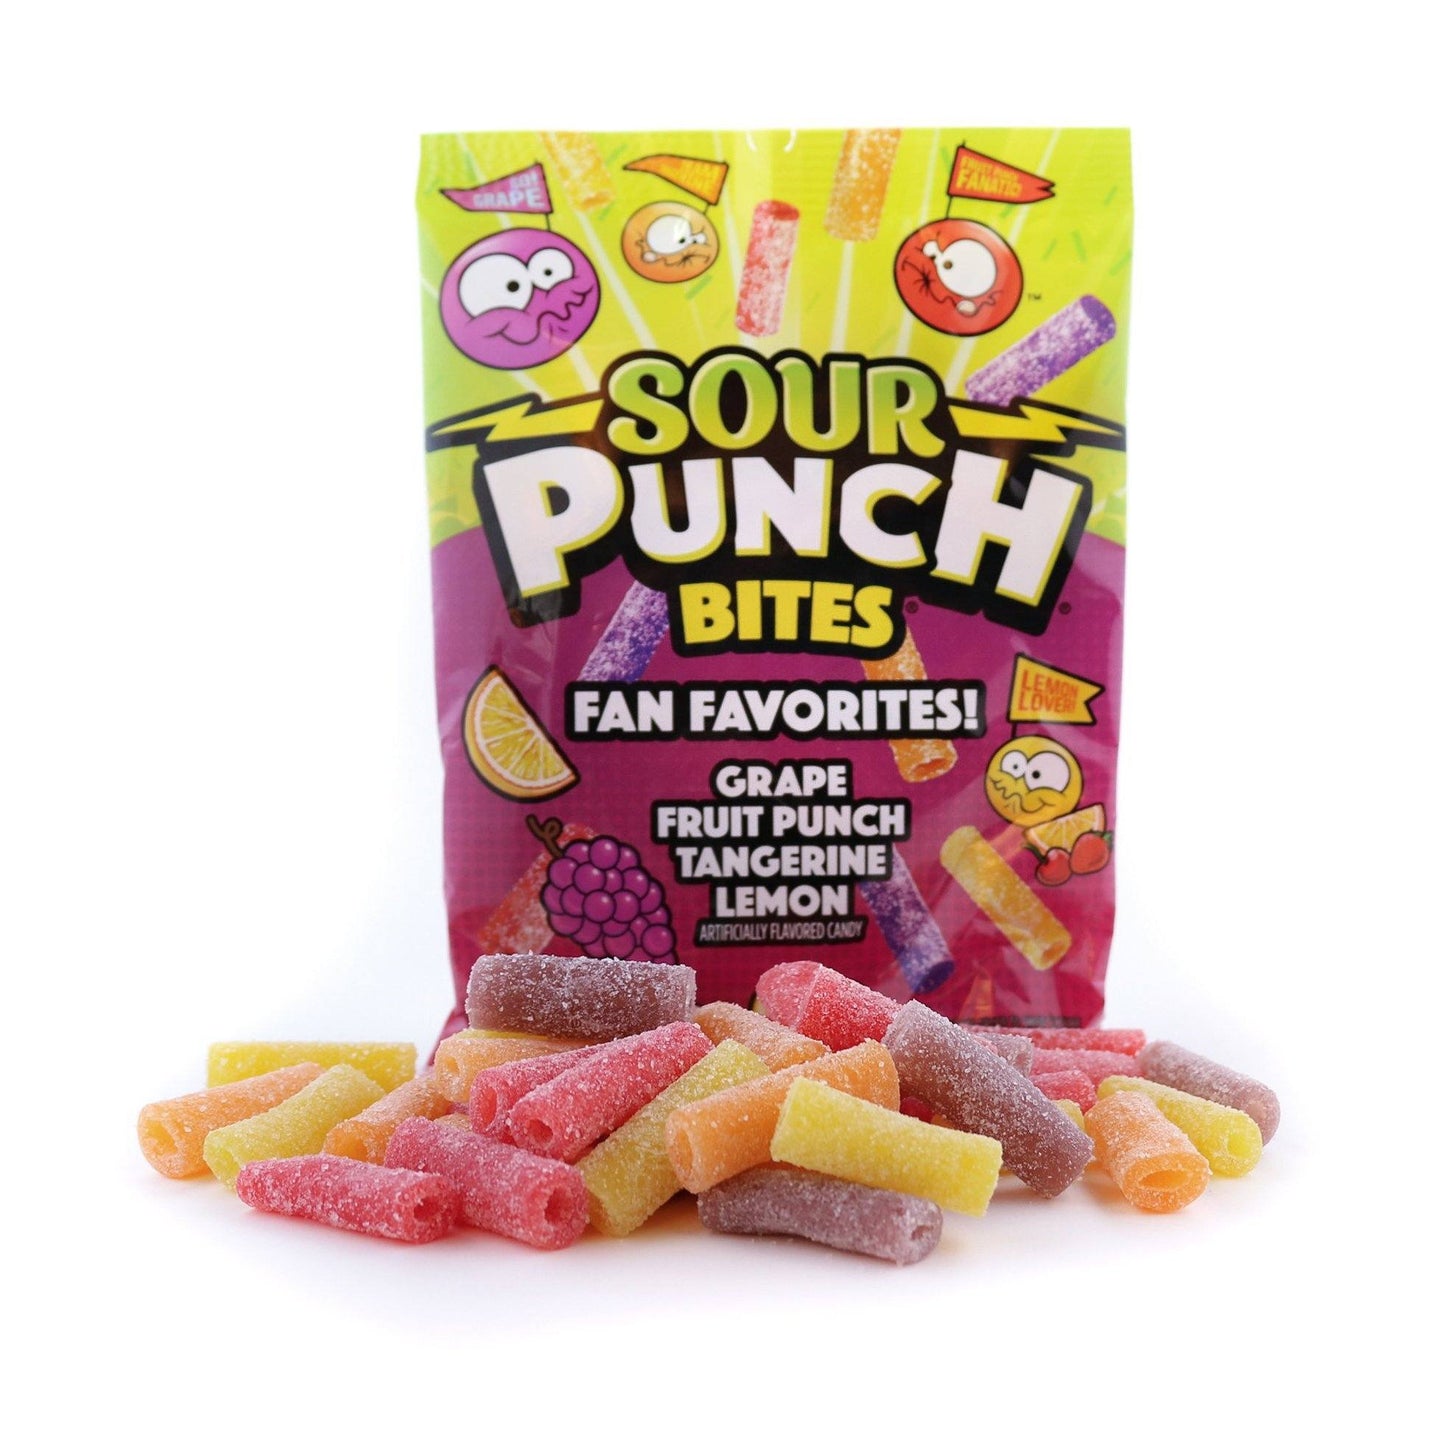 Grape, Fruit Punch, Tangerine, and Lemon bulk sour candy bites in front of Sour Punch Bites Fan Favorites 5oz bag